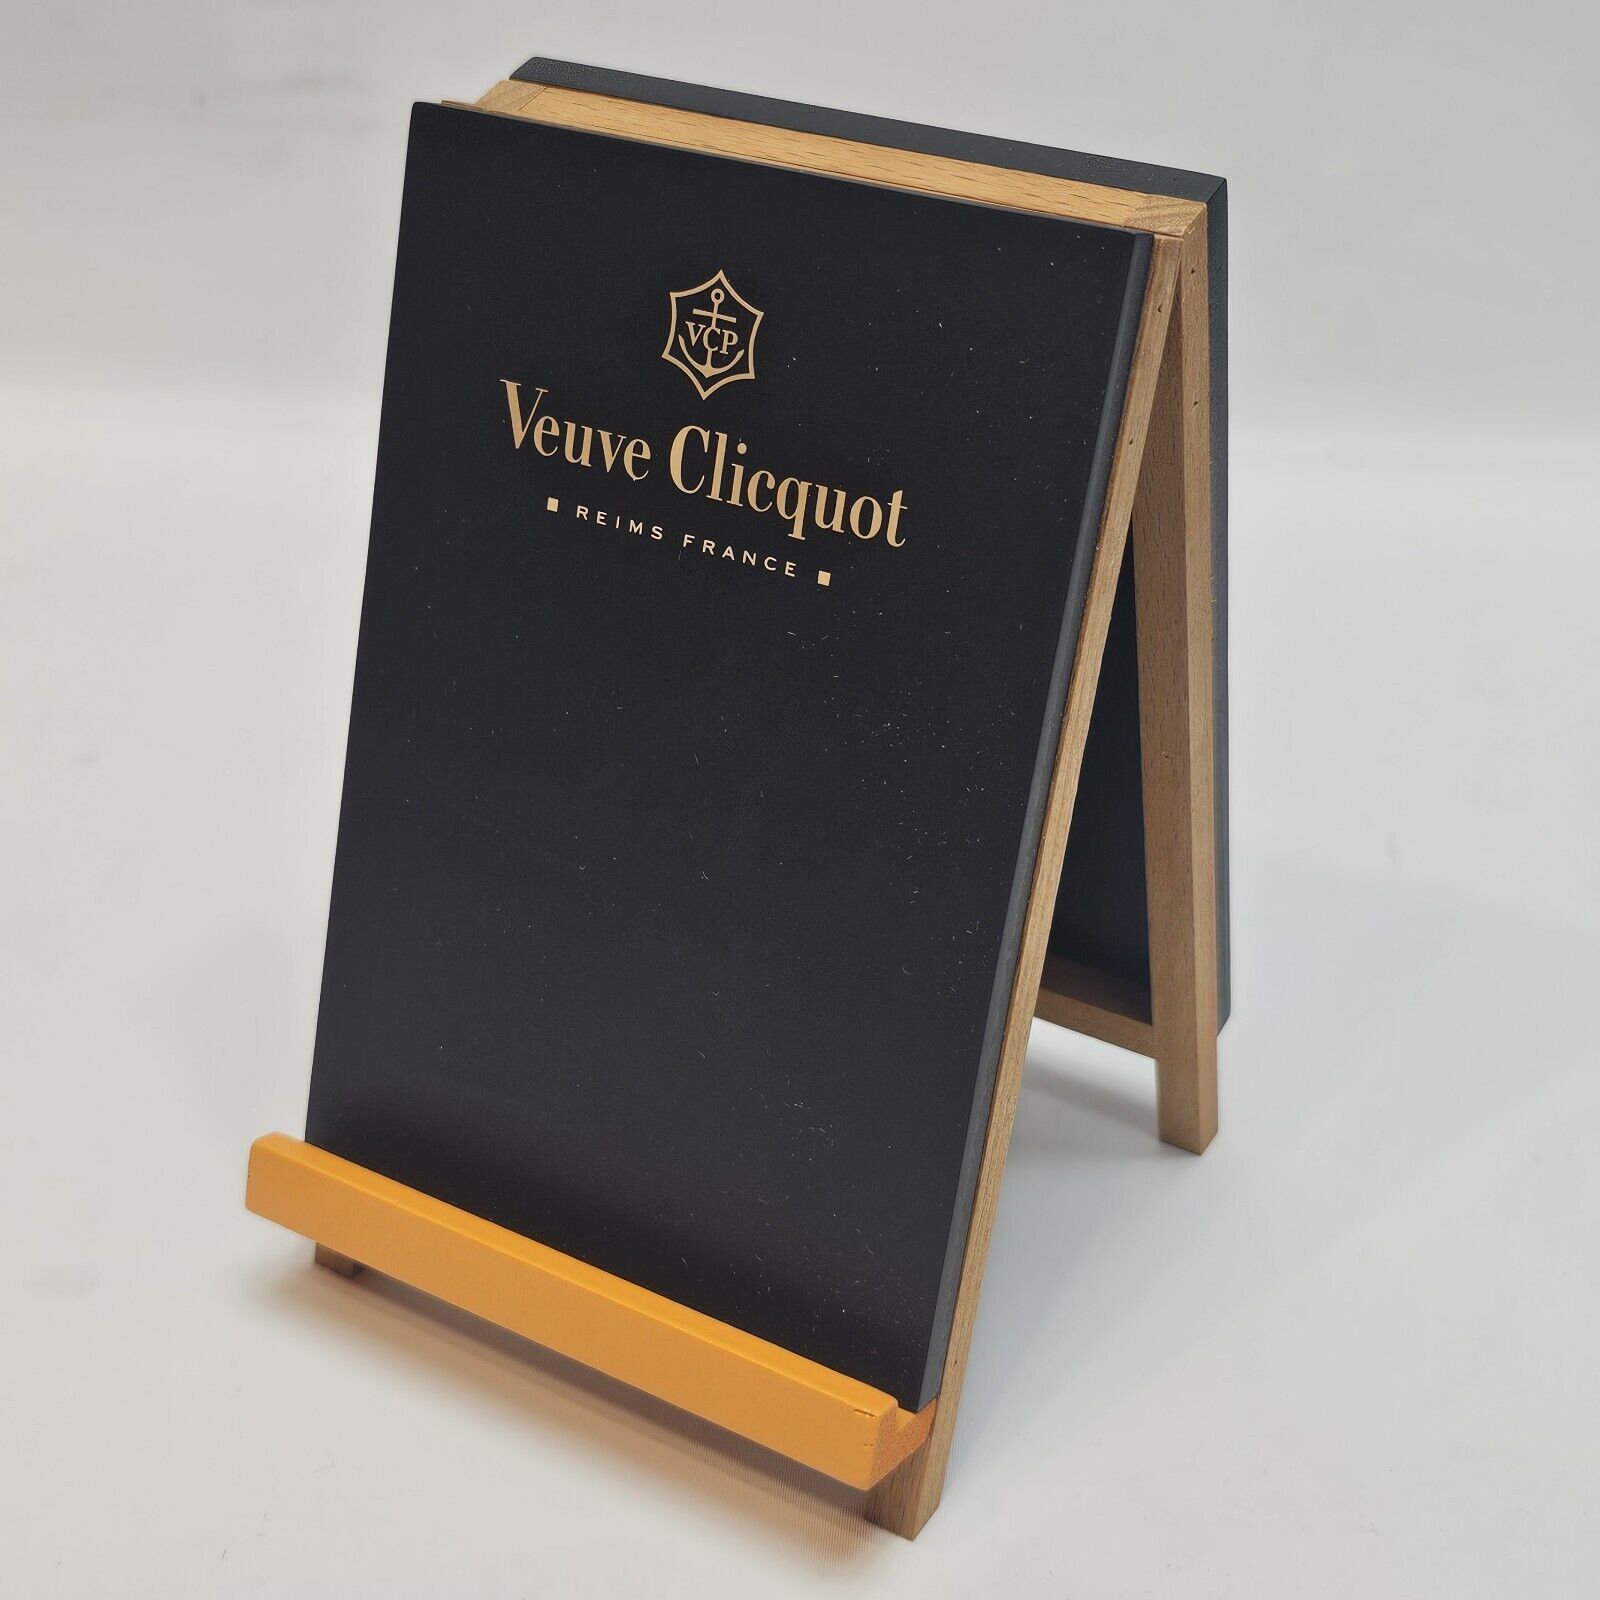 Veuve Clicquot Mini Chalkboard Mini Menu Board Brunch Champagne Reims France